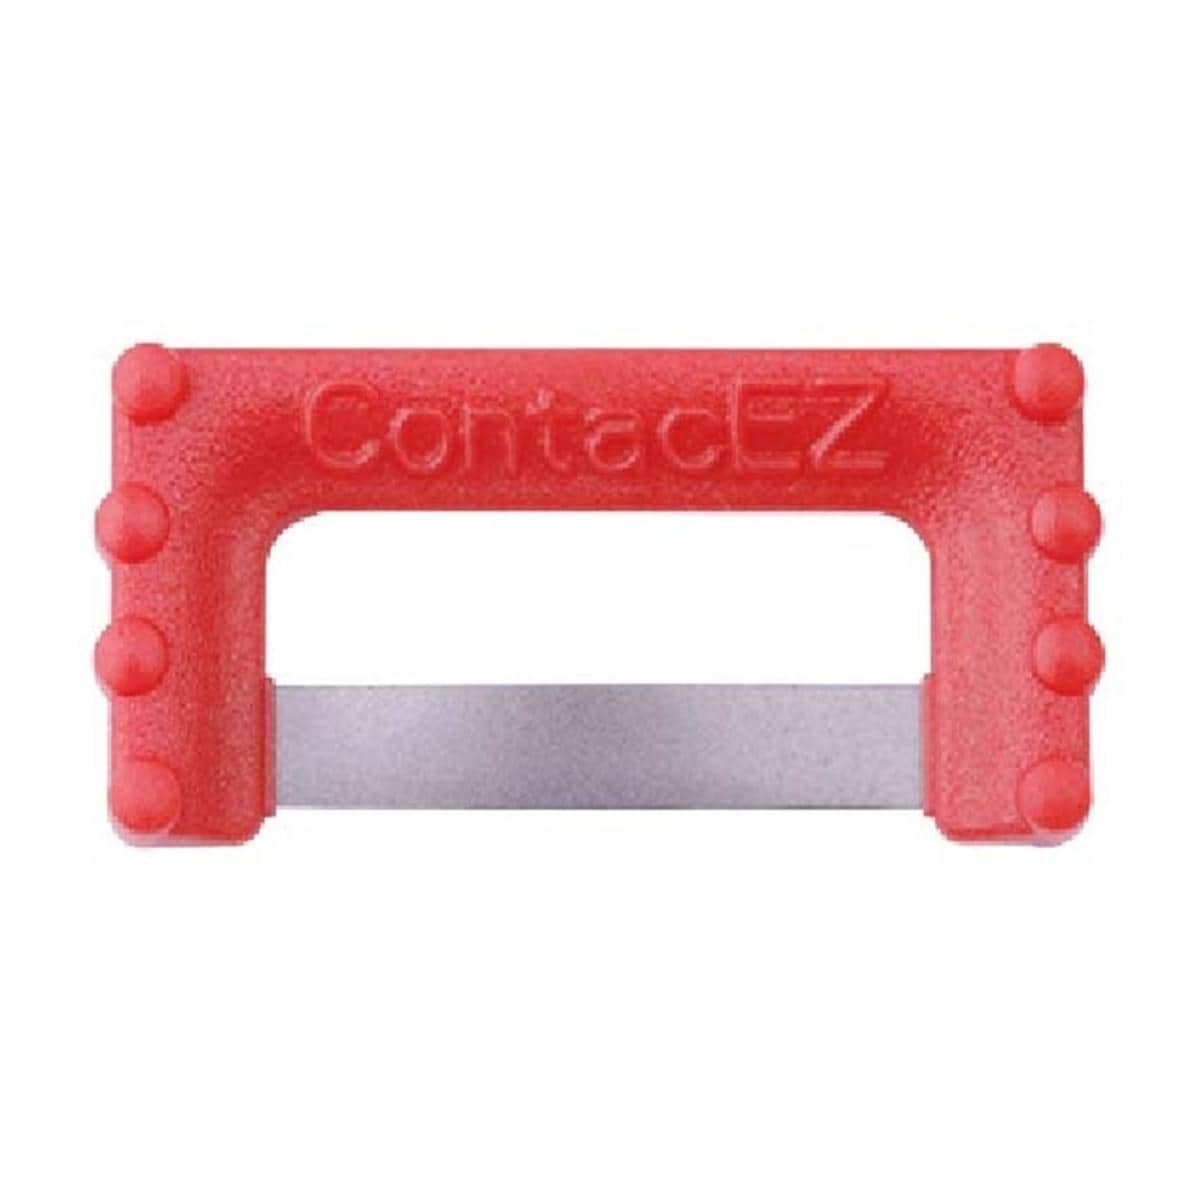 ContacEZ IPR - navulling - REF. 32408 - Rood 0,12mm, 8 stuks